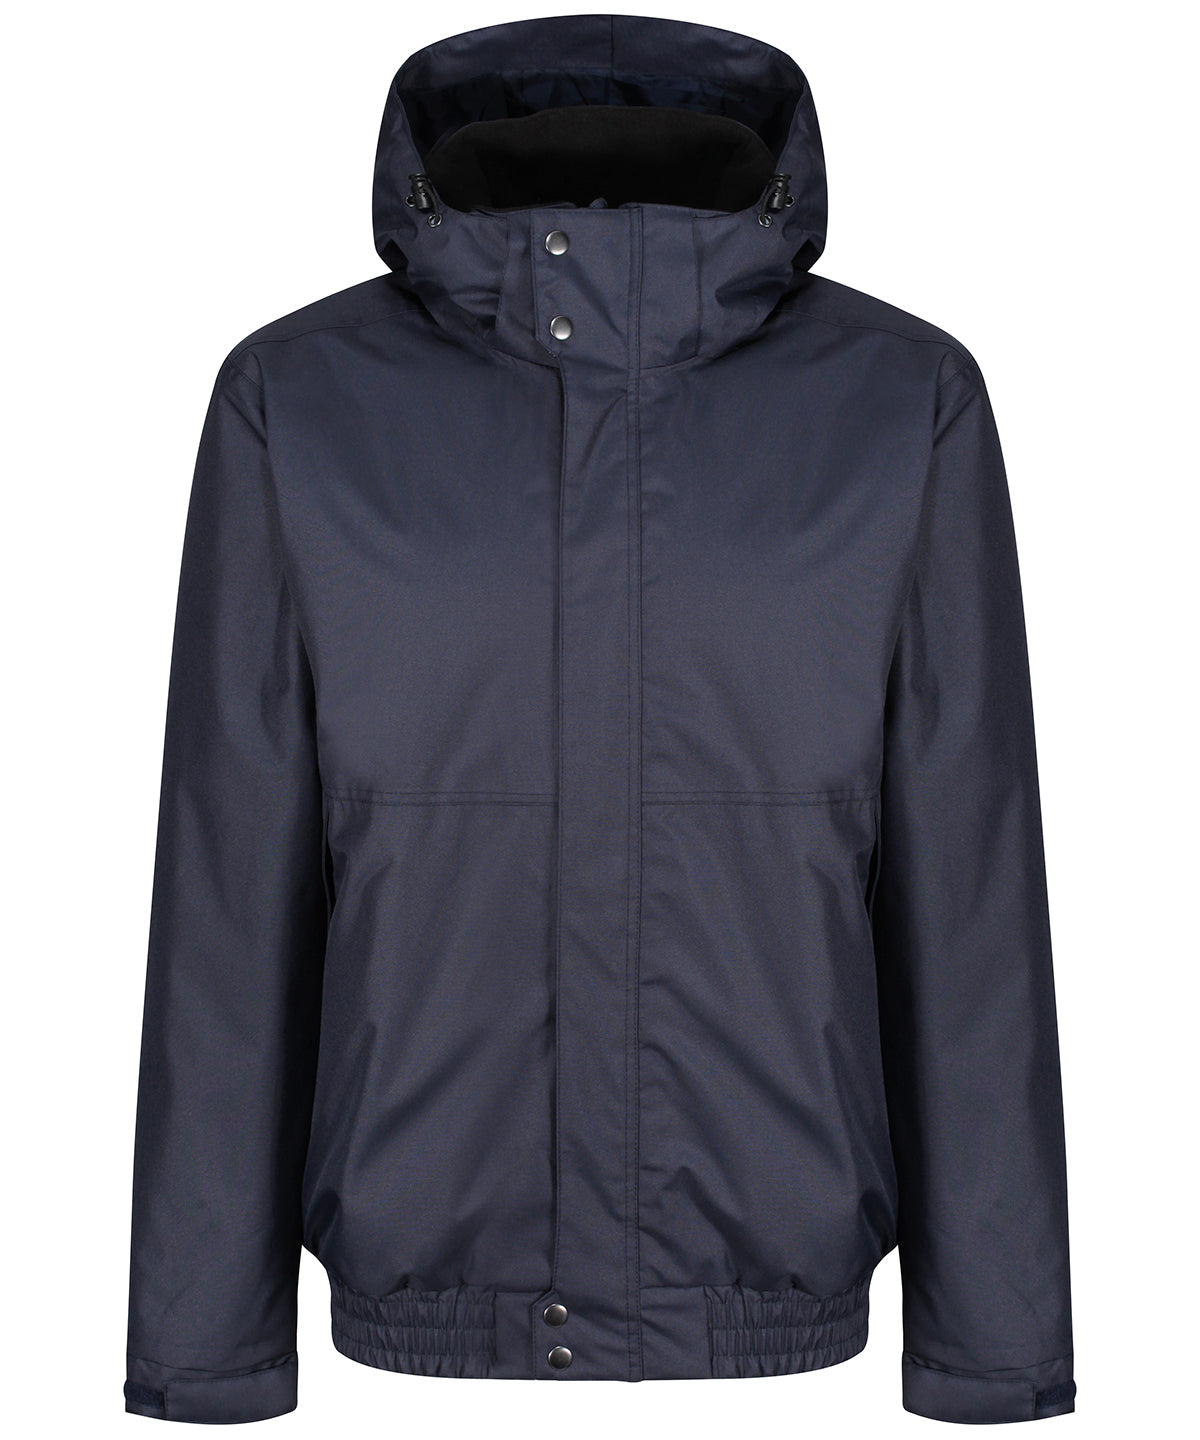 Personalised Jackets - Black Regatta Professional Blockade waterproof jacket